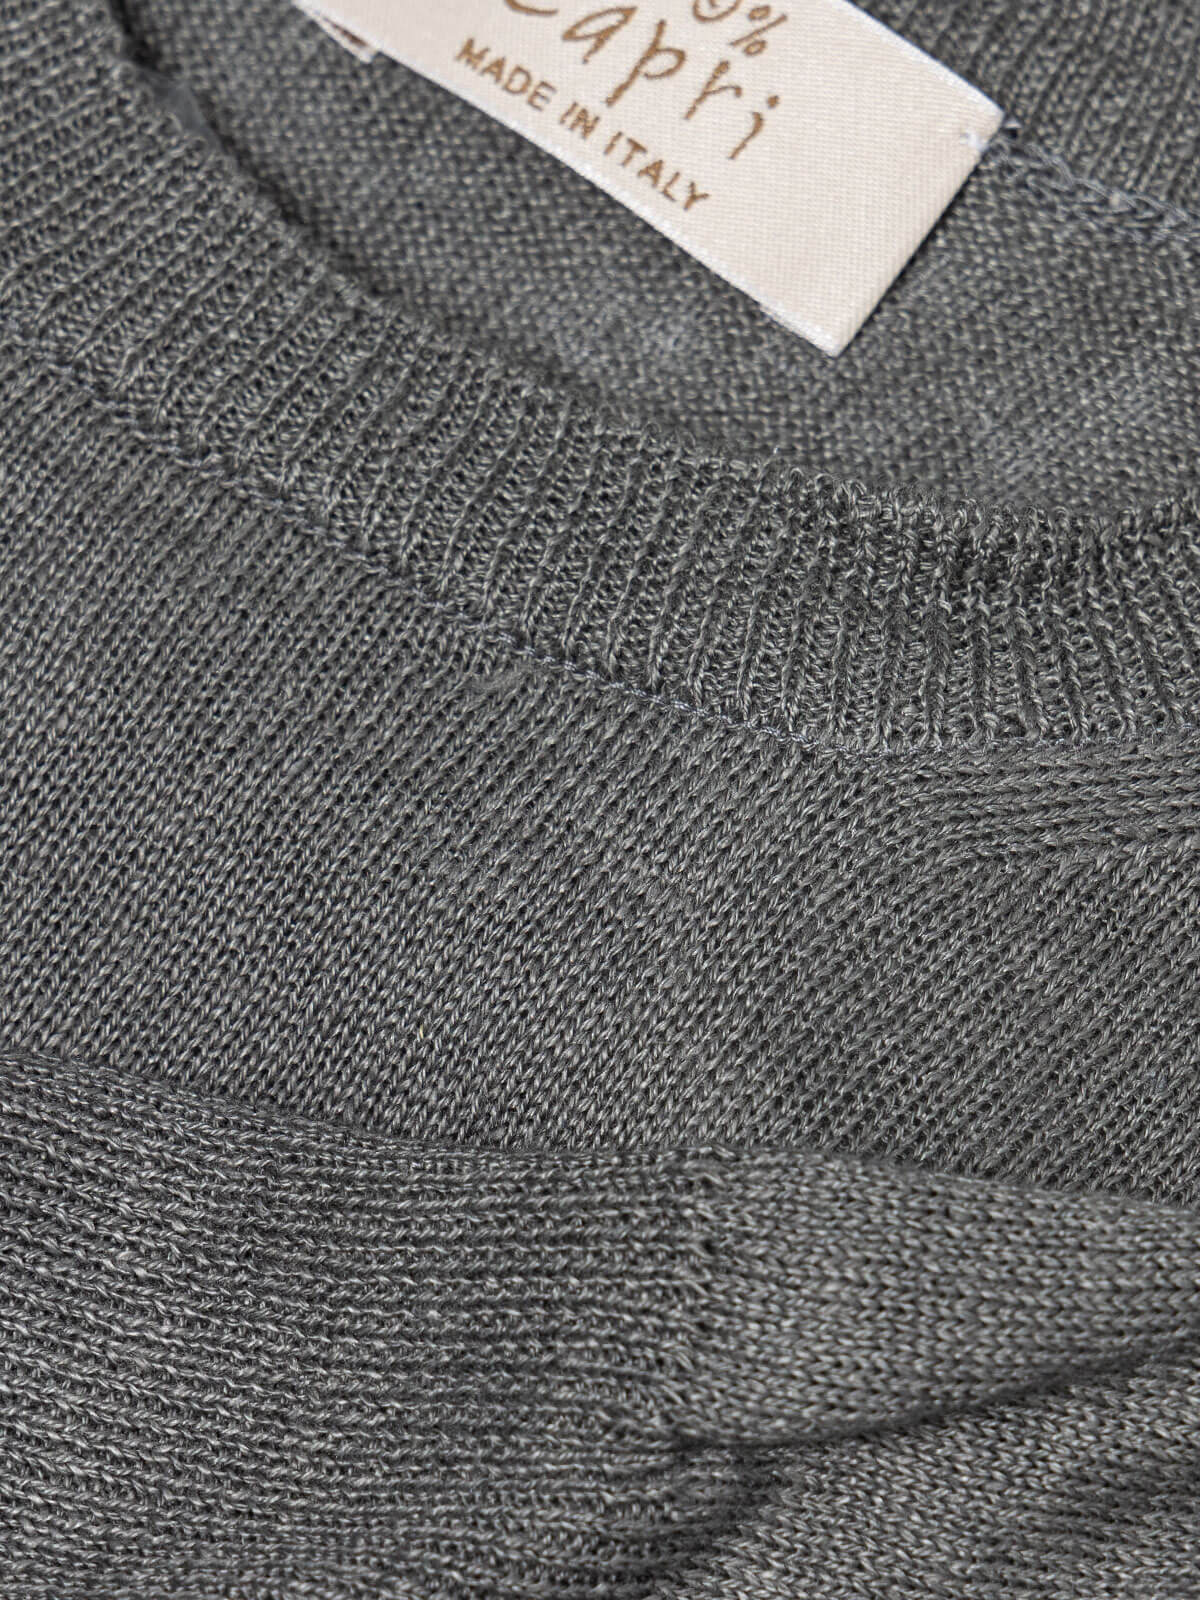 T-Shirt M/L for man 100% Capri linen dark grey t-shirt detail